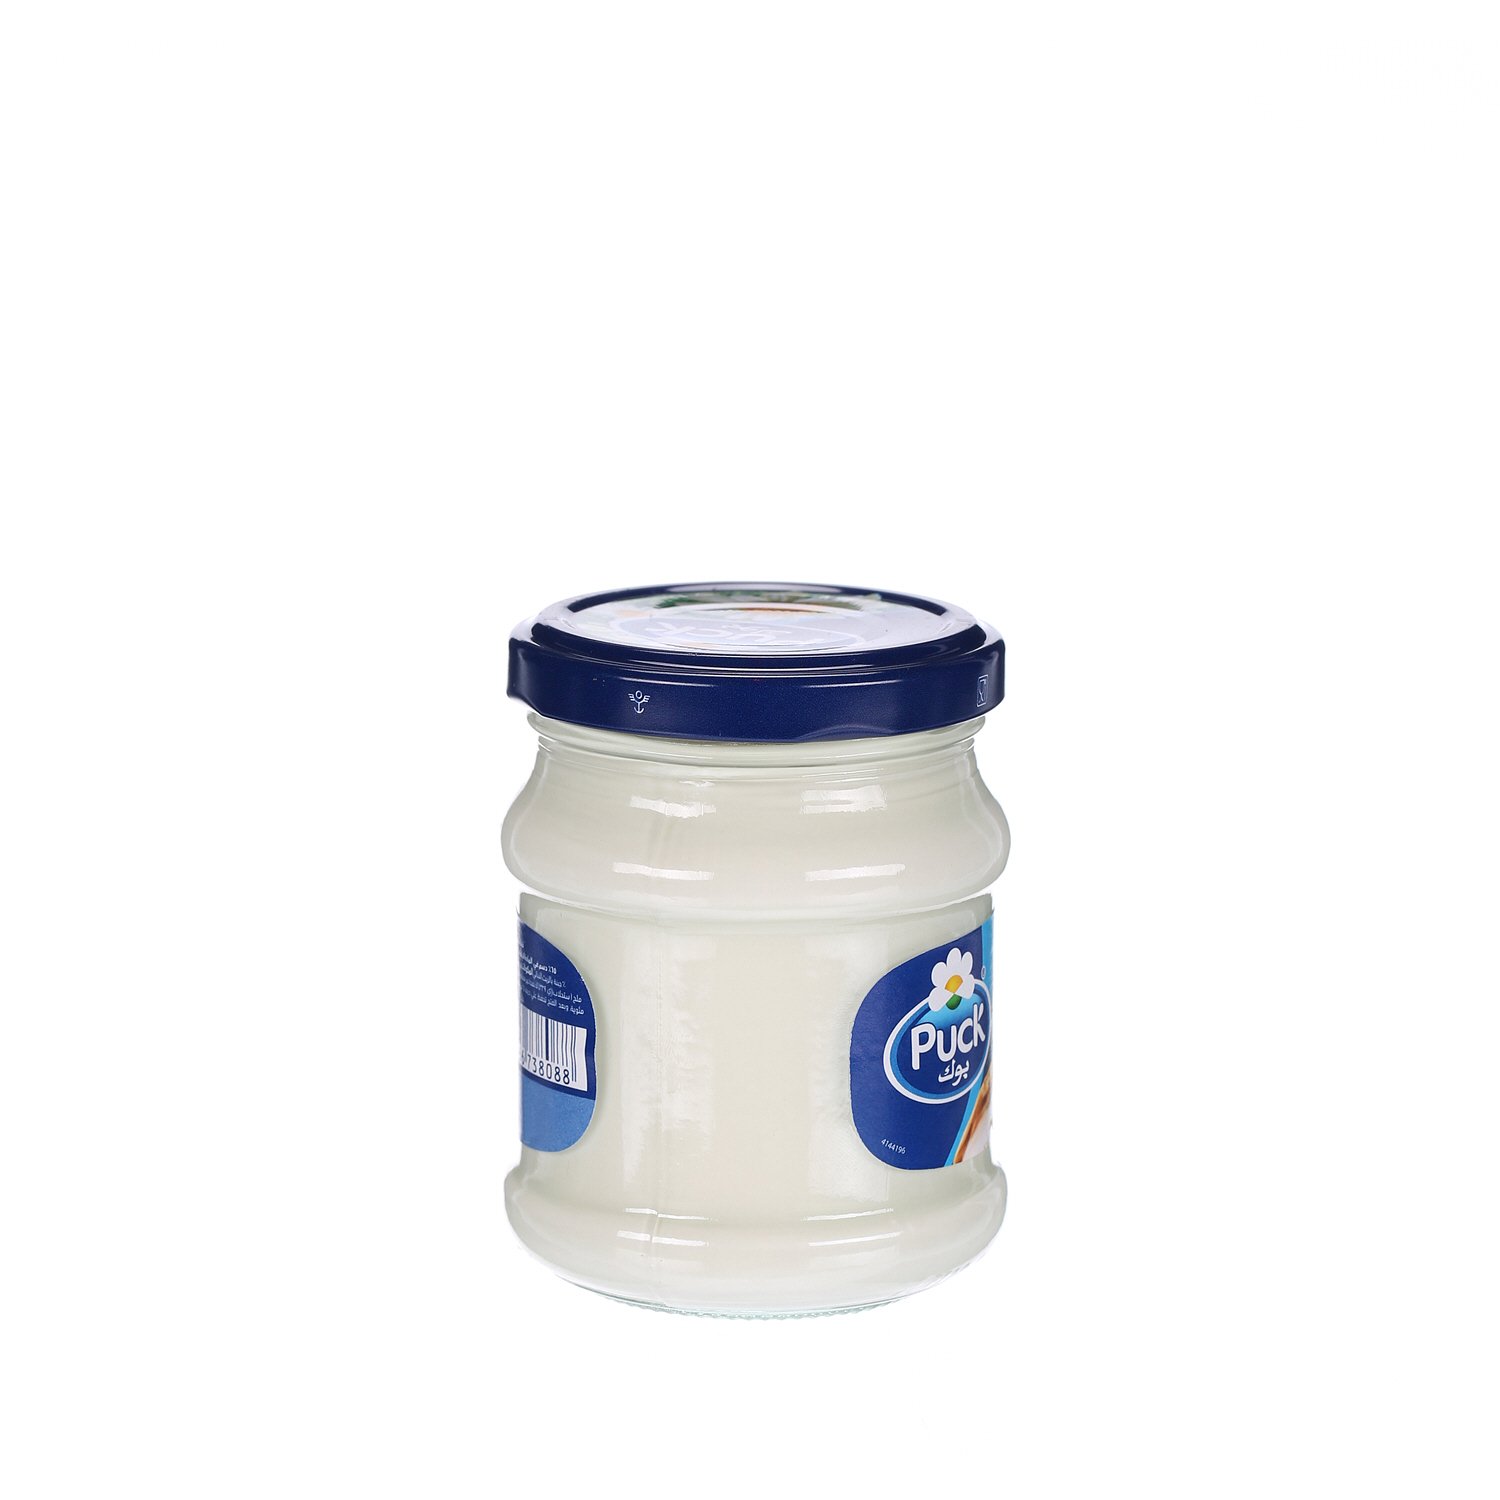 Puck Cheese Cream Jar 140 g